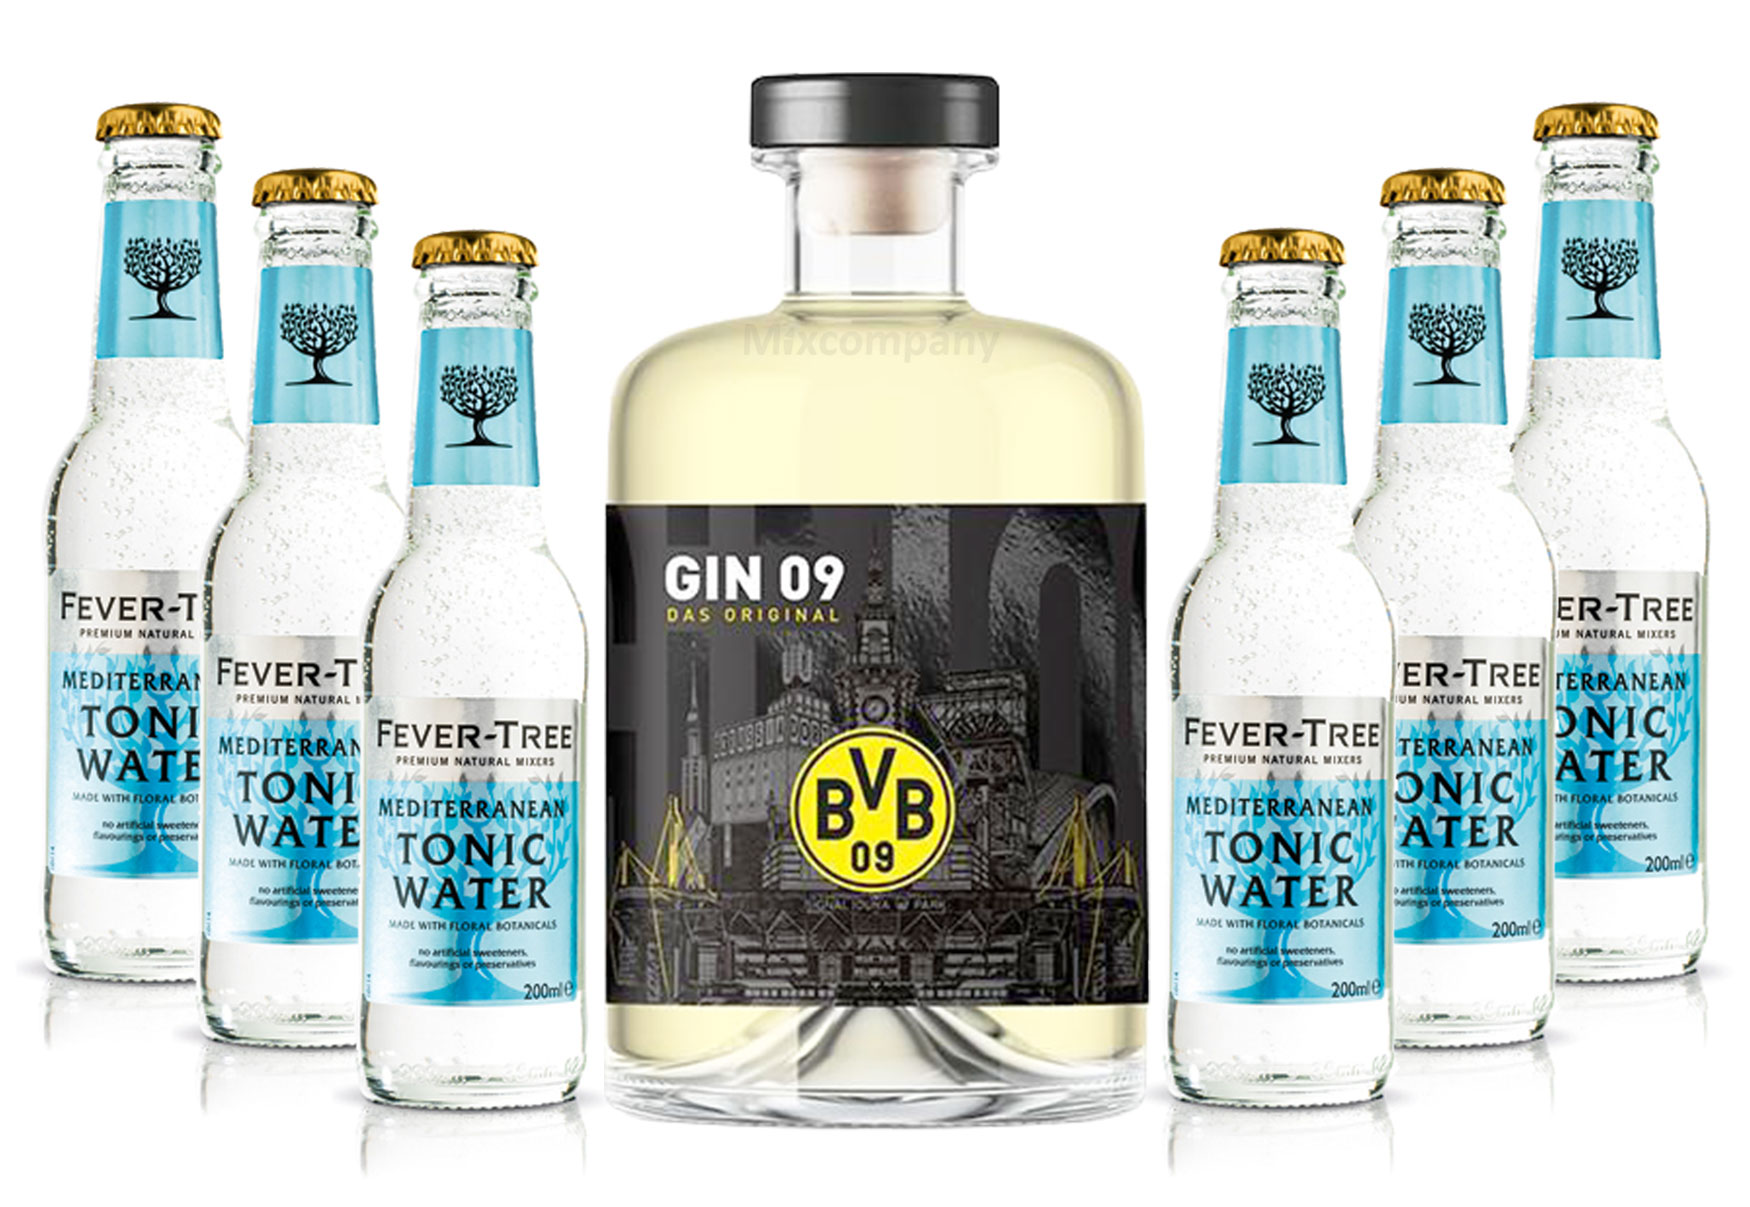 BVB Gin 09 Das Original 0,5l 500ml (43% Vol) + 6xFever-Tree Mediterranean Tonic Water 0,2 MEHRWEG inkl. Pfand - [Enthält Sulfite]